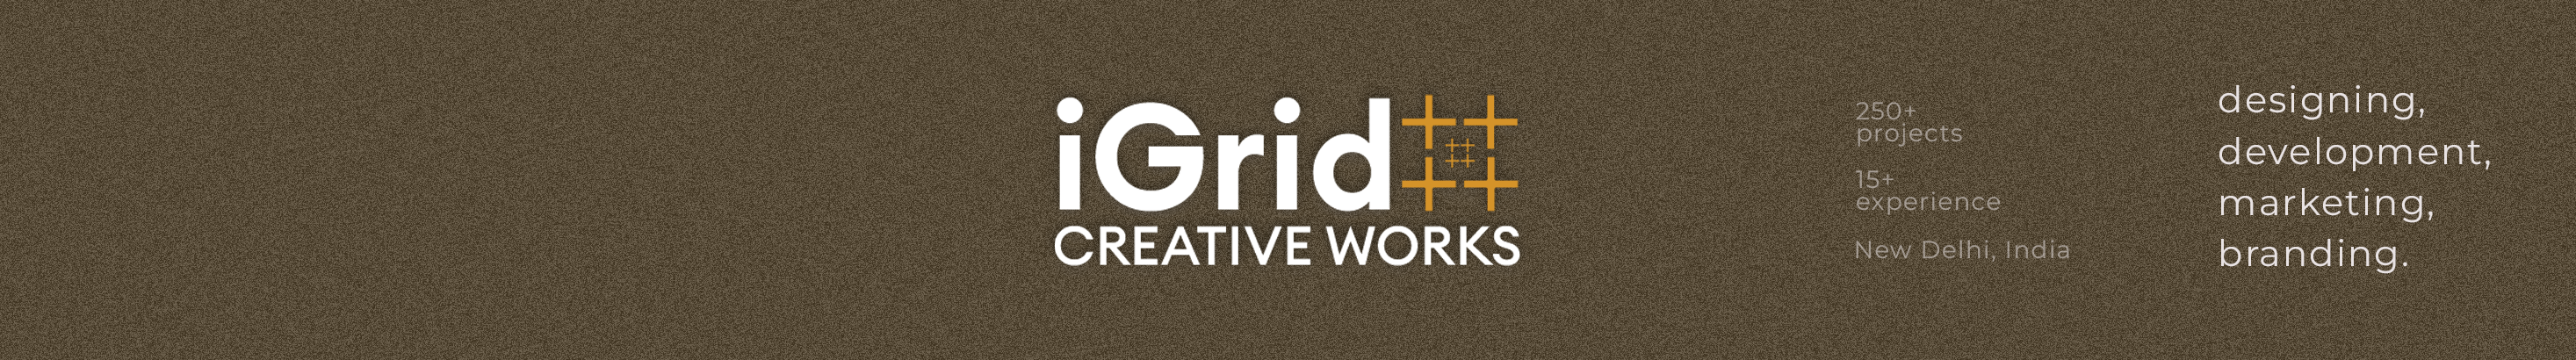 iGRID Creative Works's profile banner